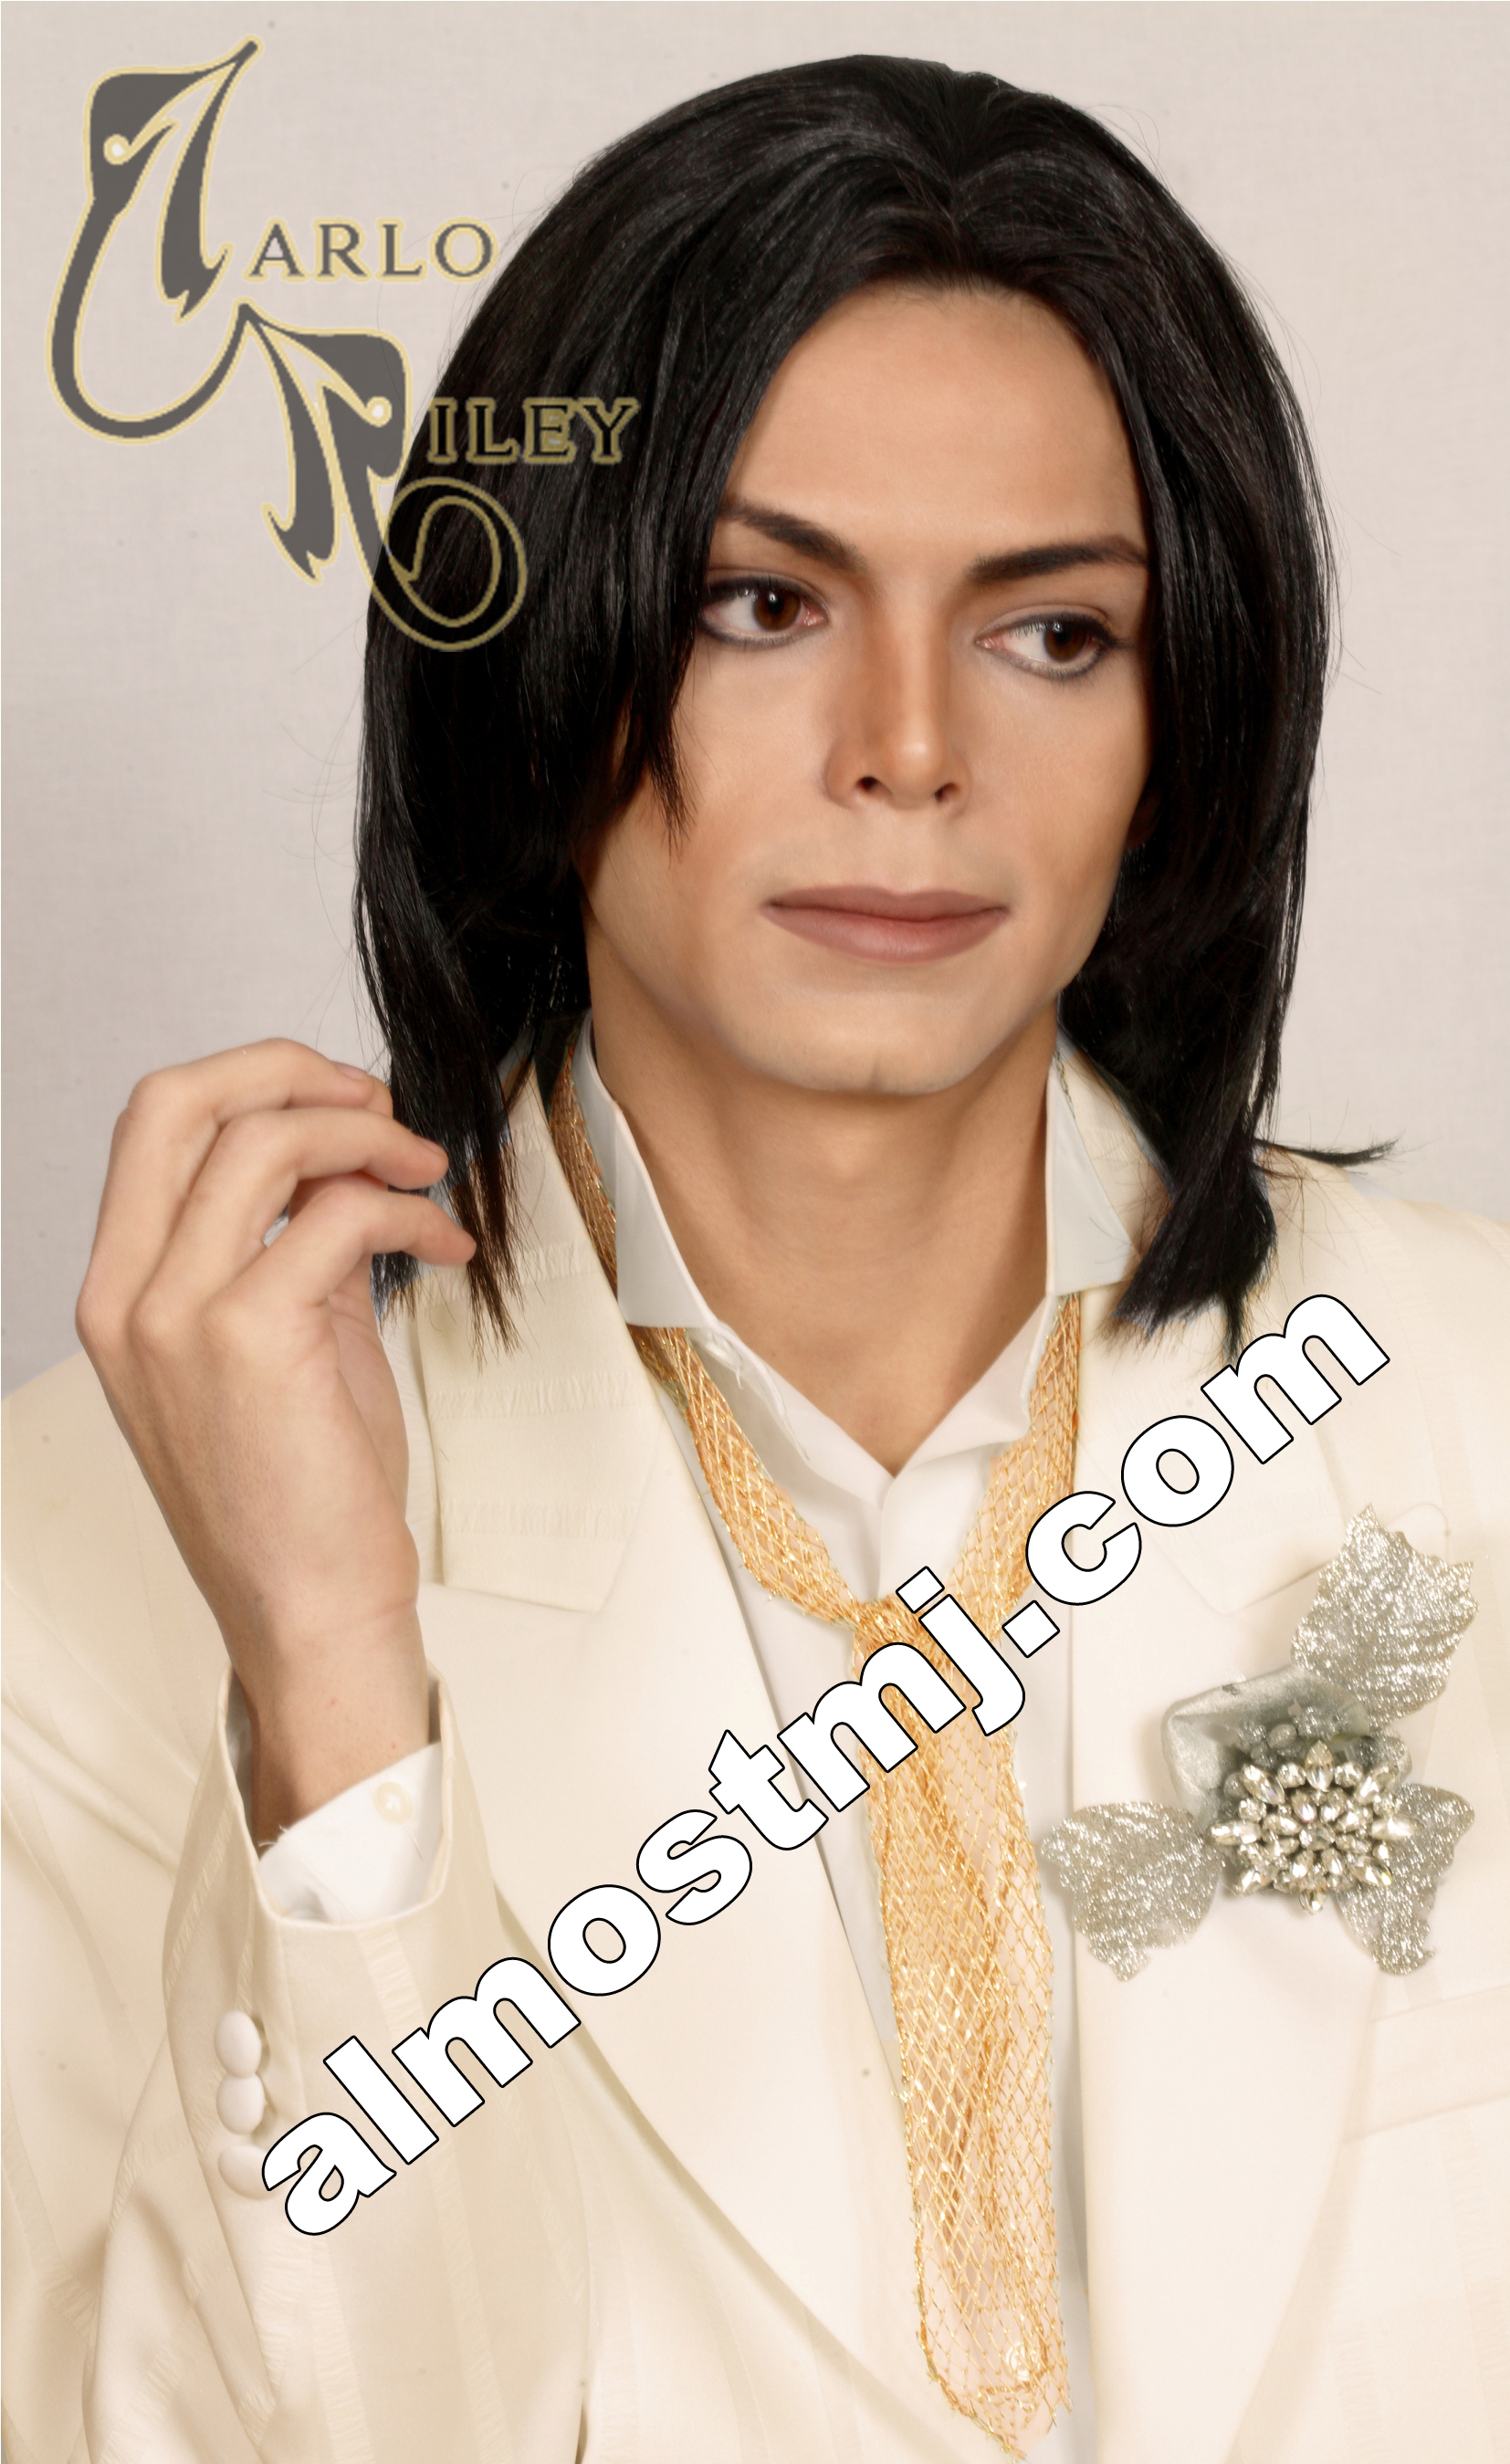 Michael Jackson impersonator Carlo Riley